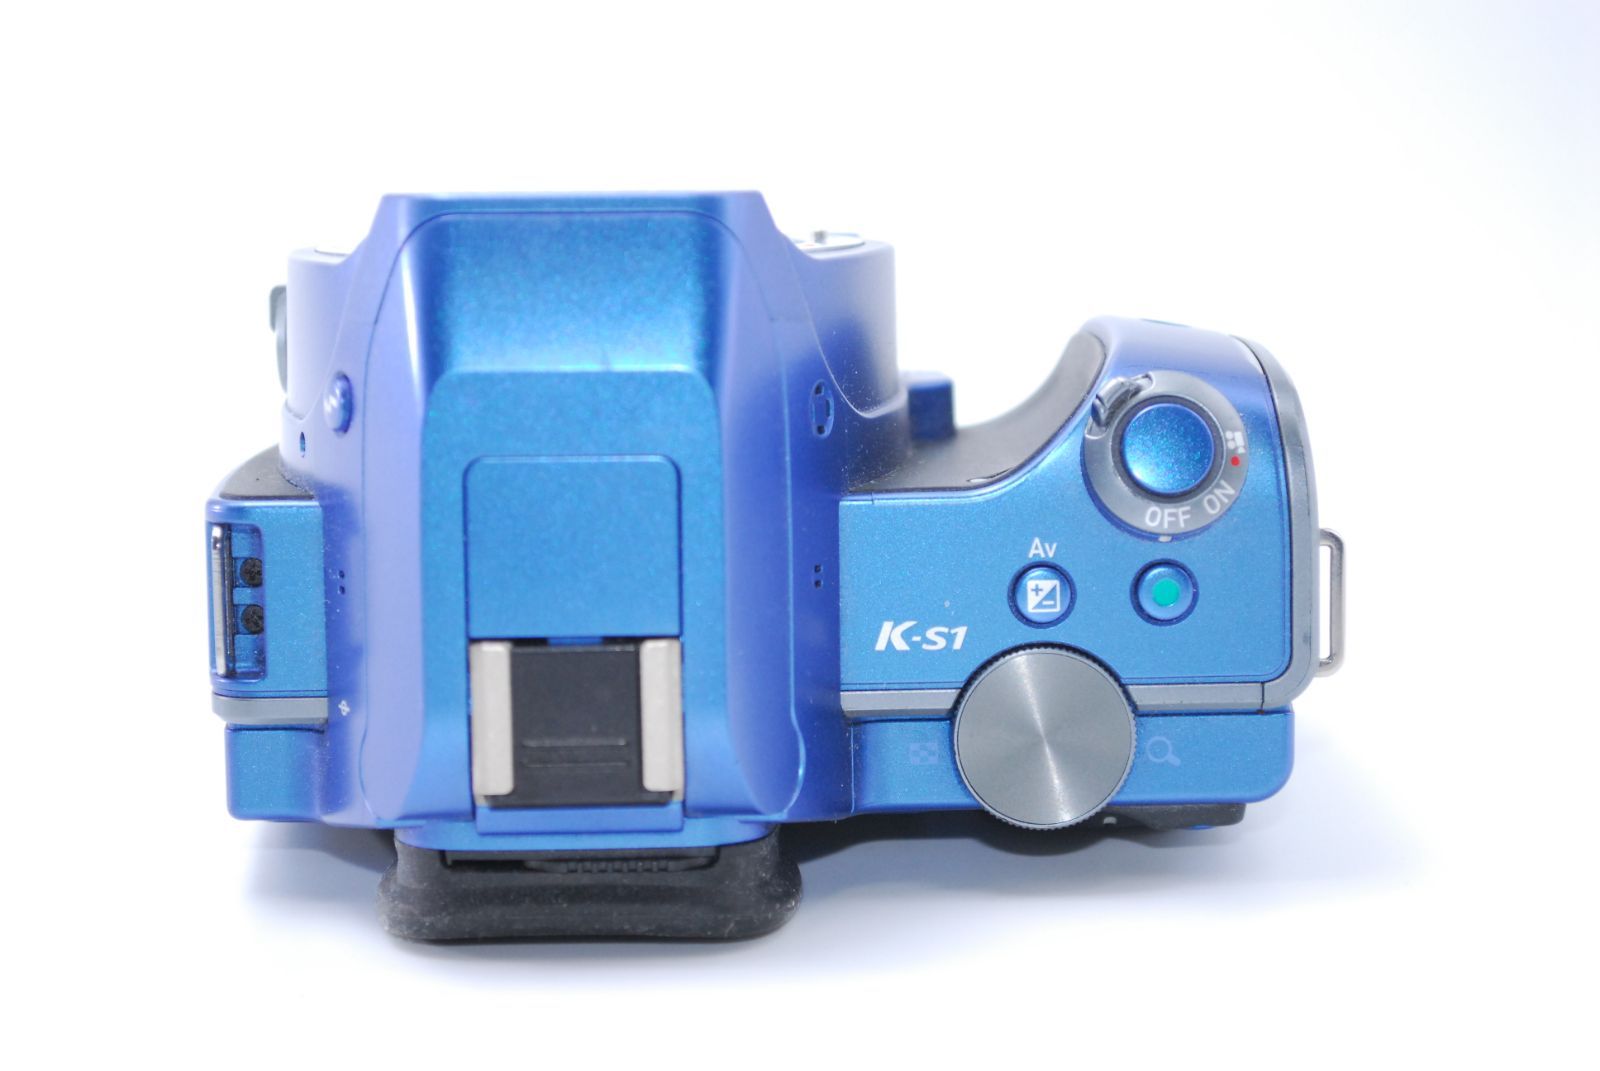 RICOH デジタル一眼レフ PENTAX K-S1 ボディ ブルー K-S1 BODY KIT BLUE  06484 価格比較